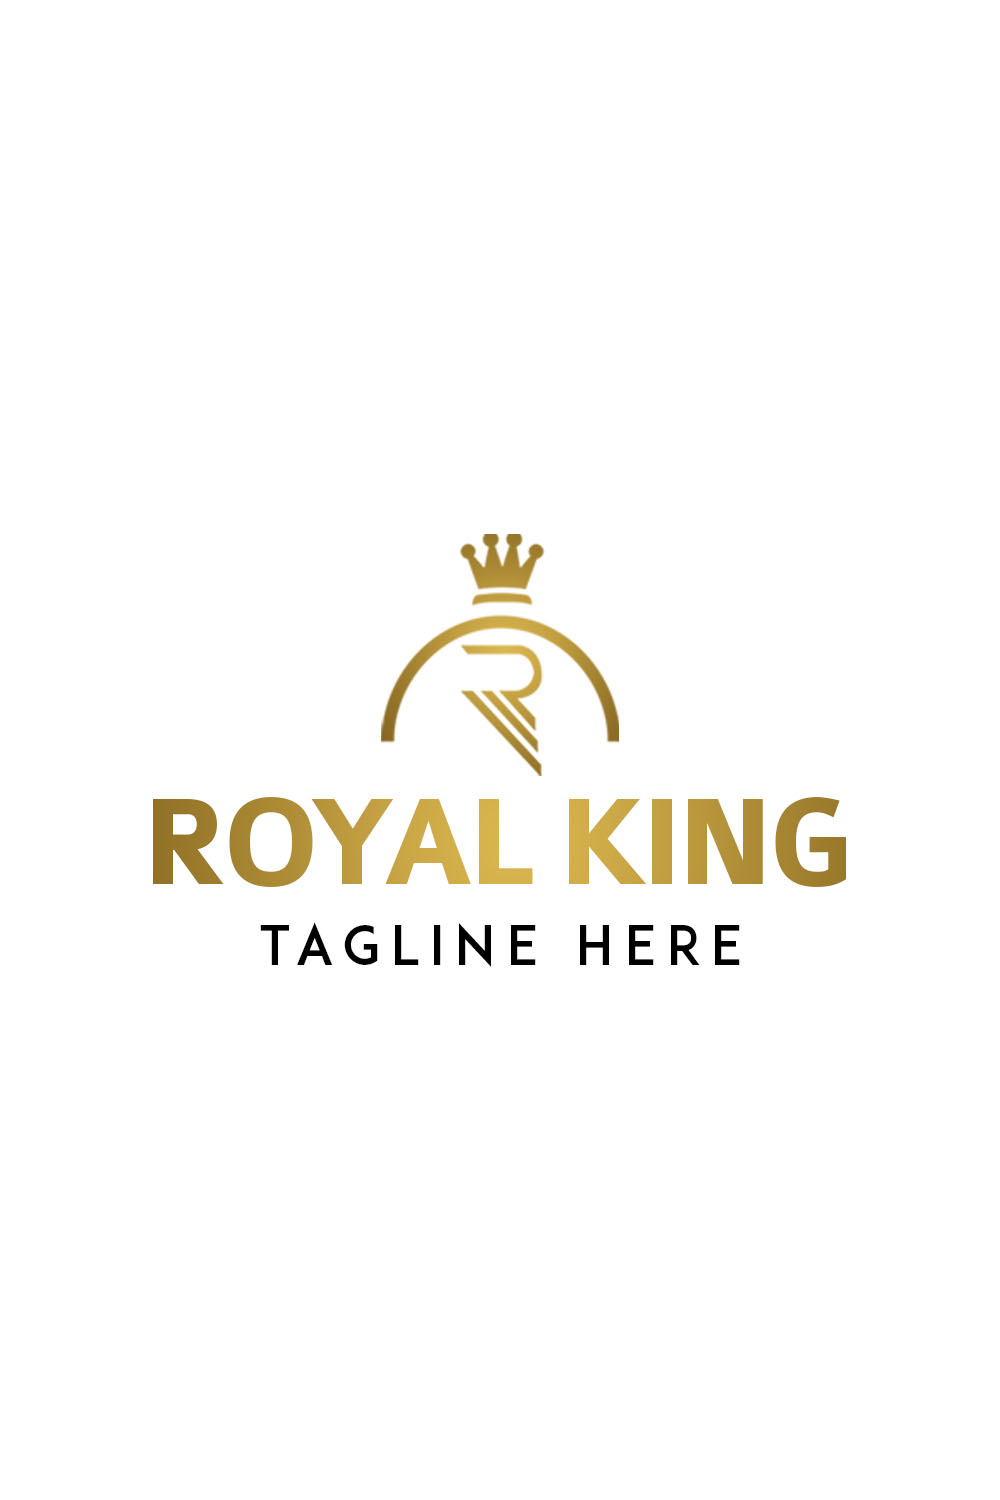 Royal King Logo Template Pinterest image.